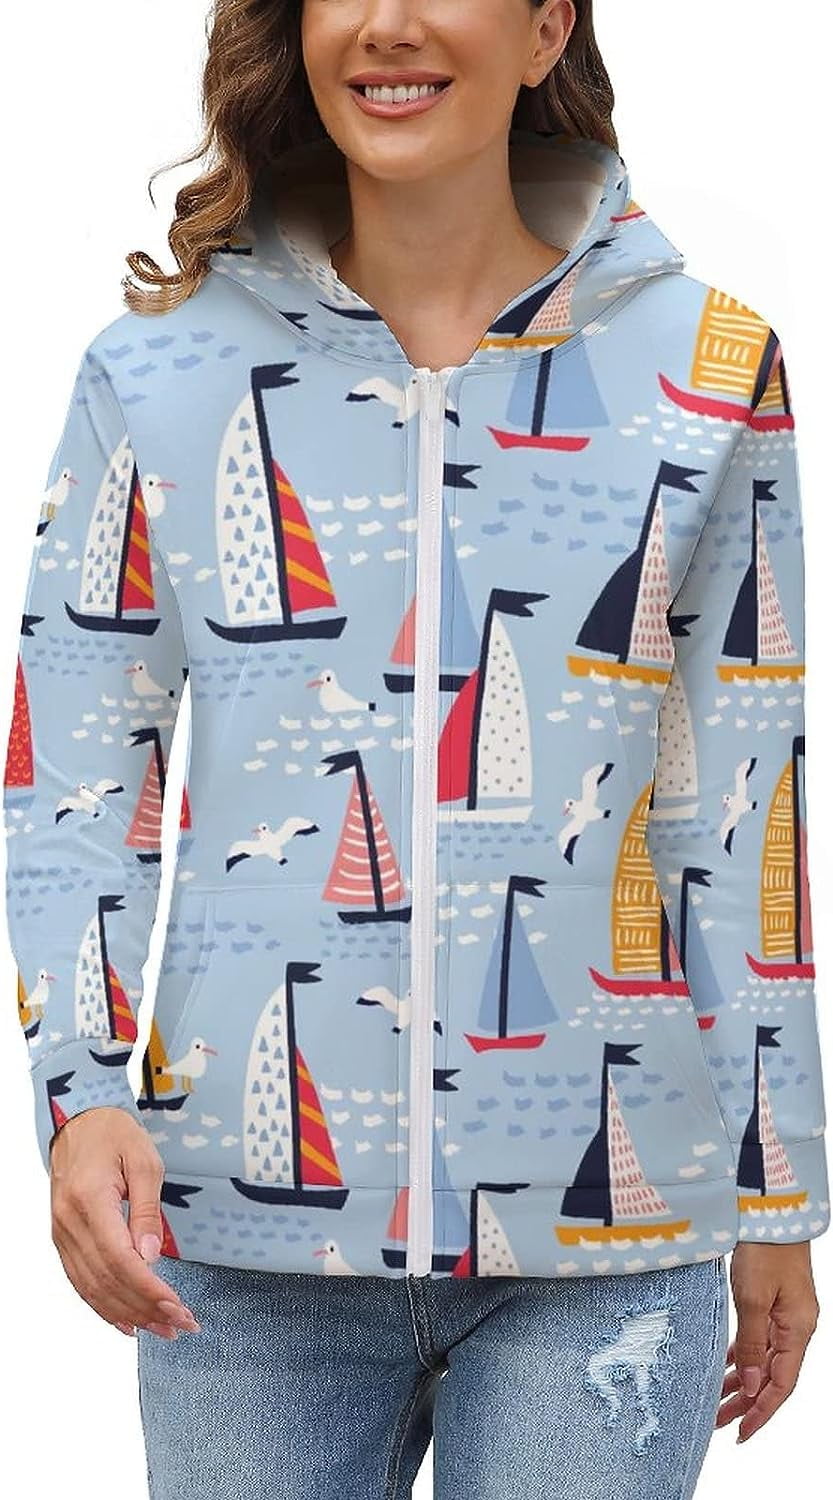 Yachts and Seagulls Women's Full-Zip Hooded Sweatshirt Soft Fleece ...